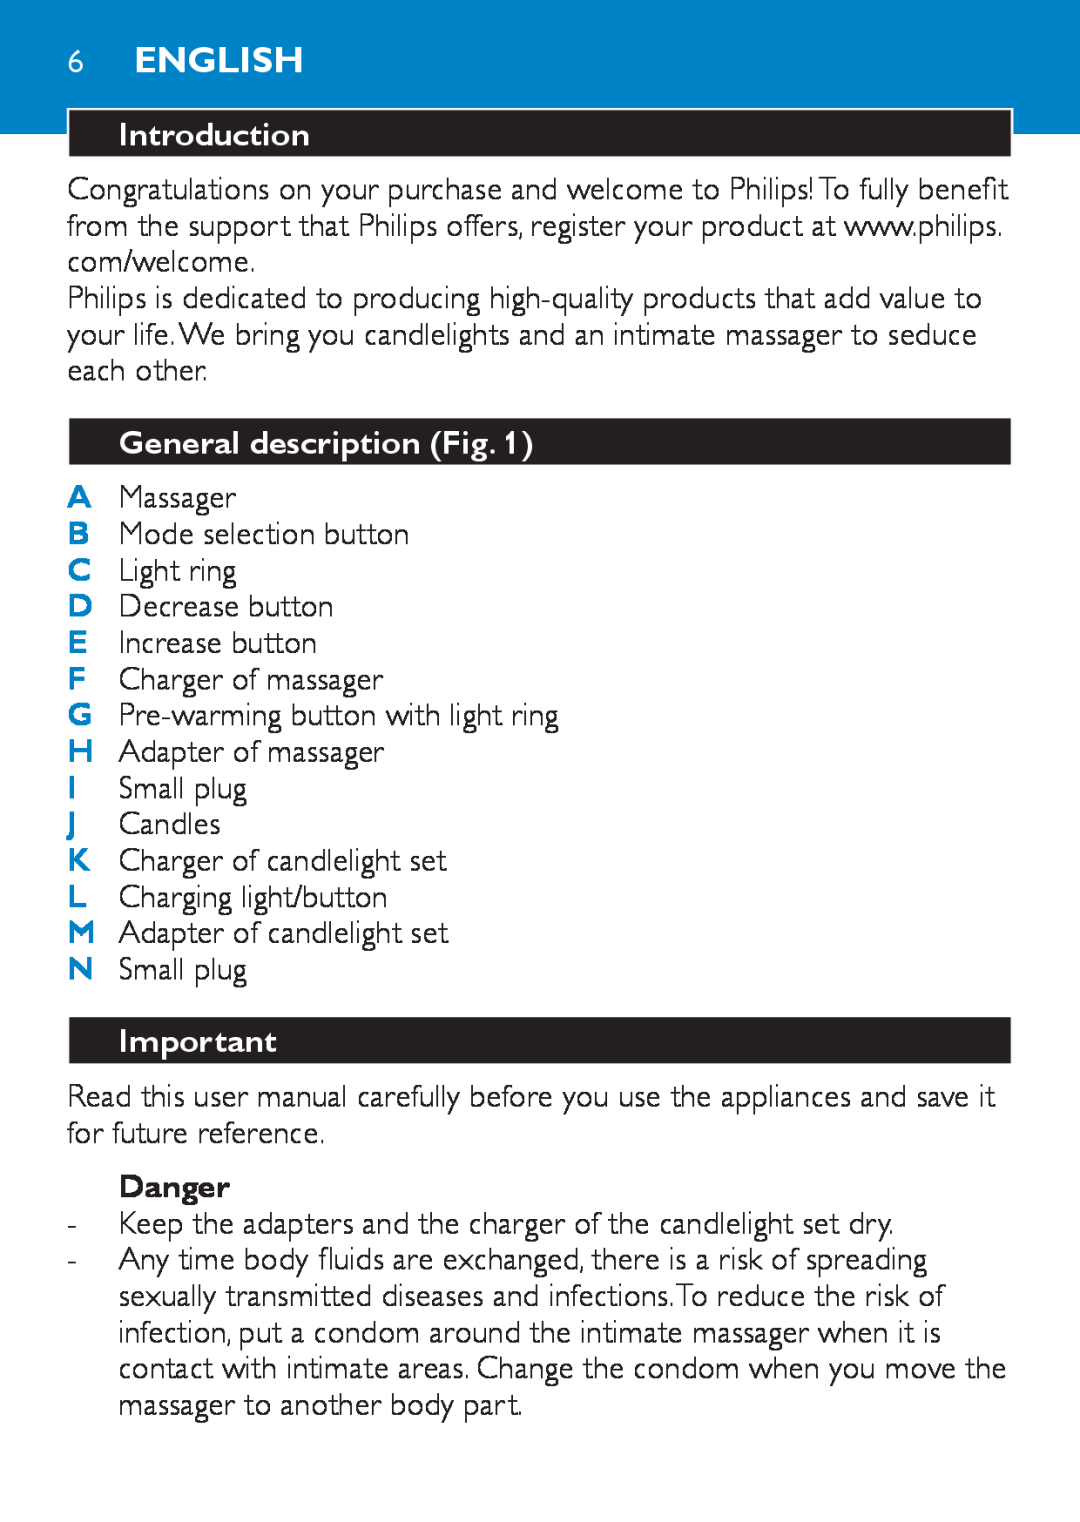 Philips HF8430 manual English, Introduction, General description Fig, Danger 